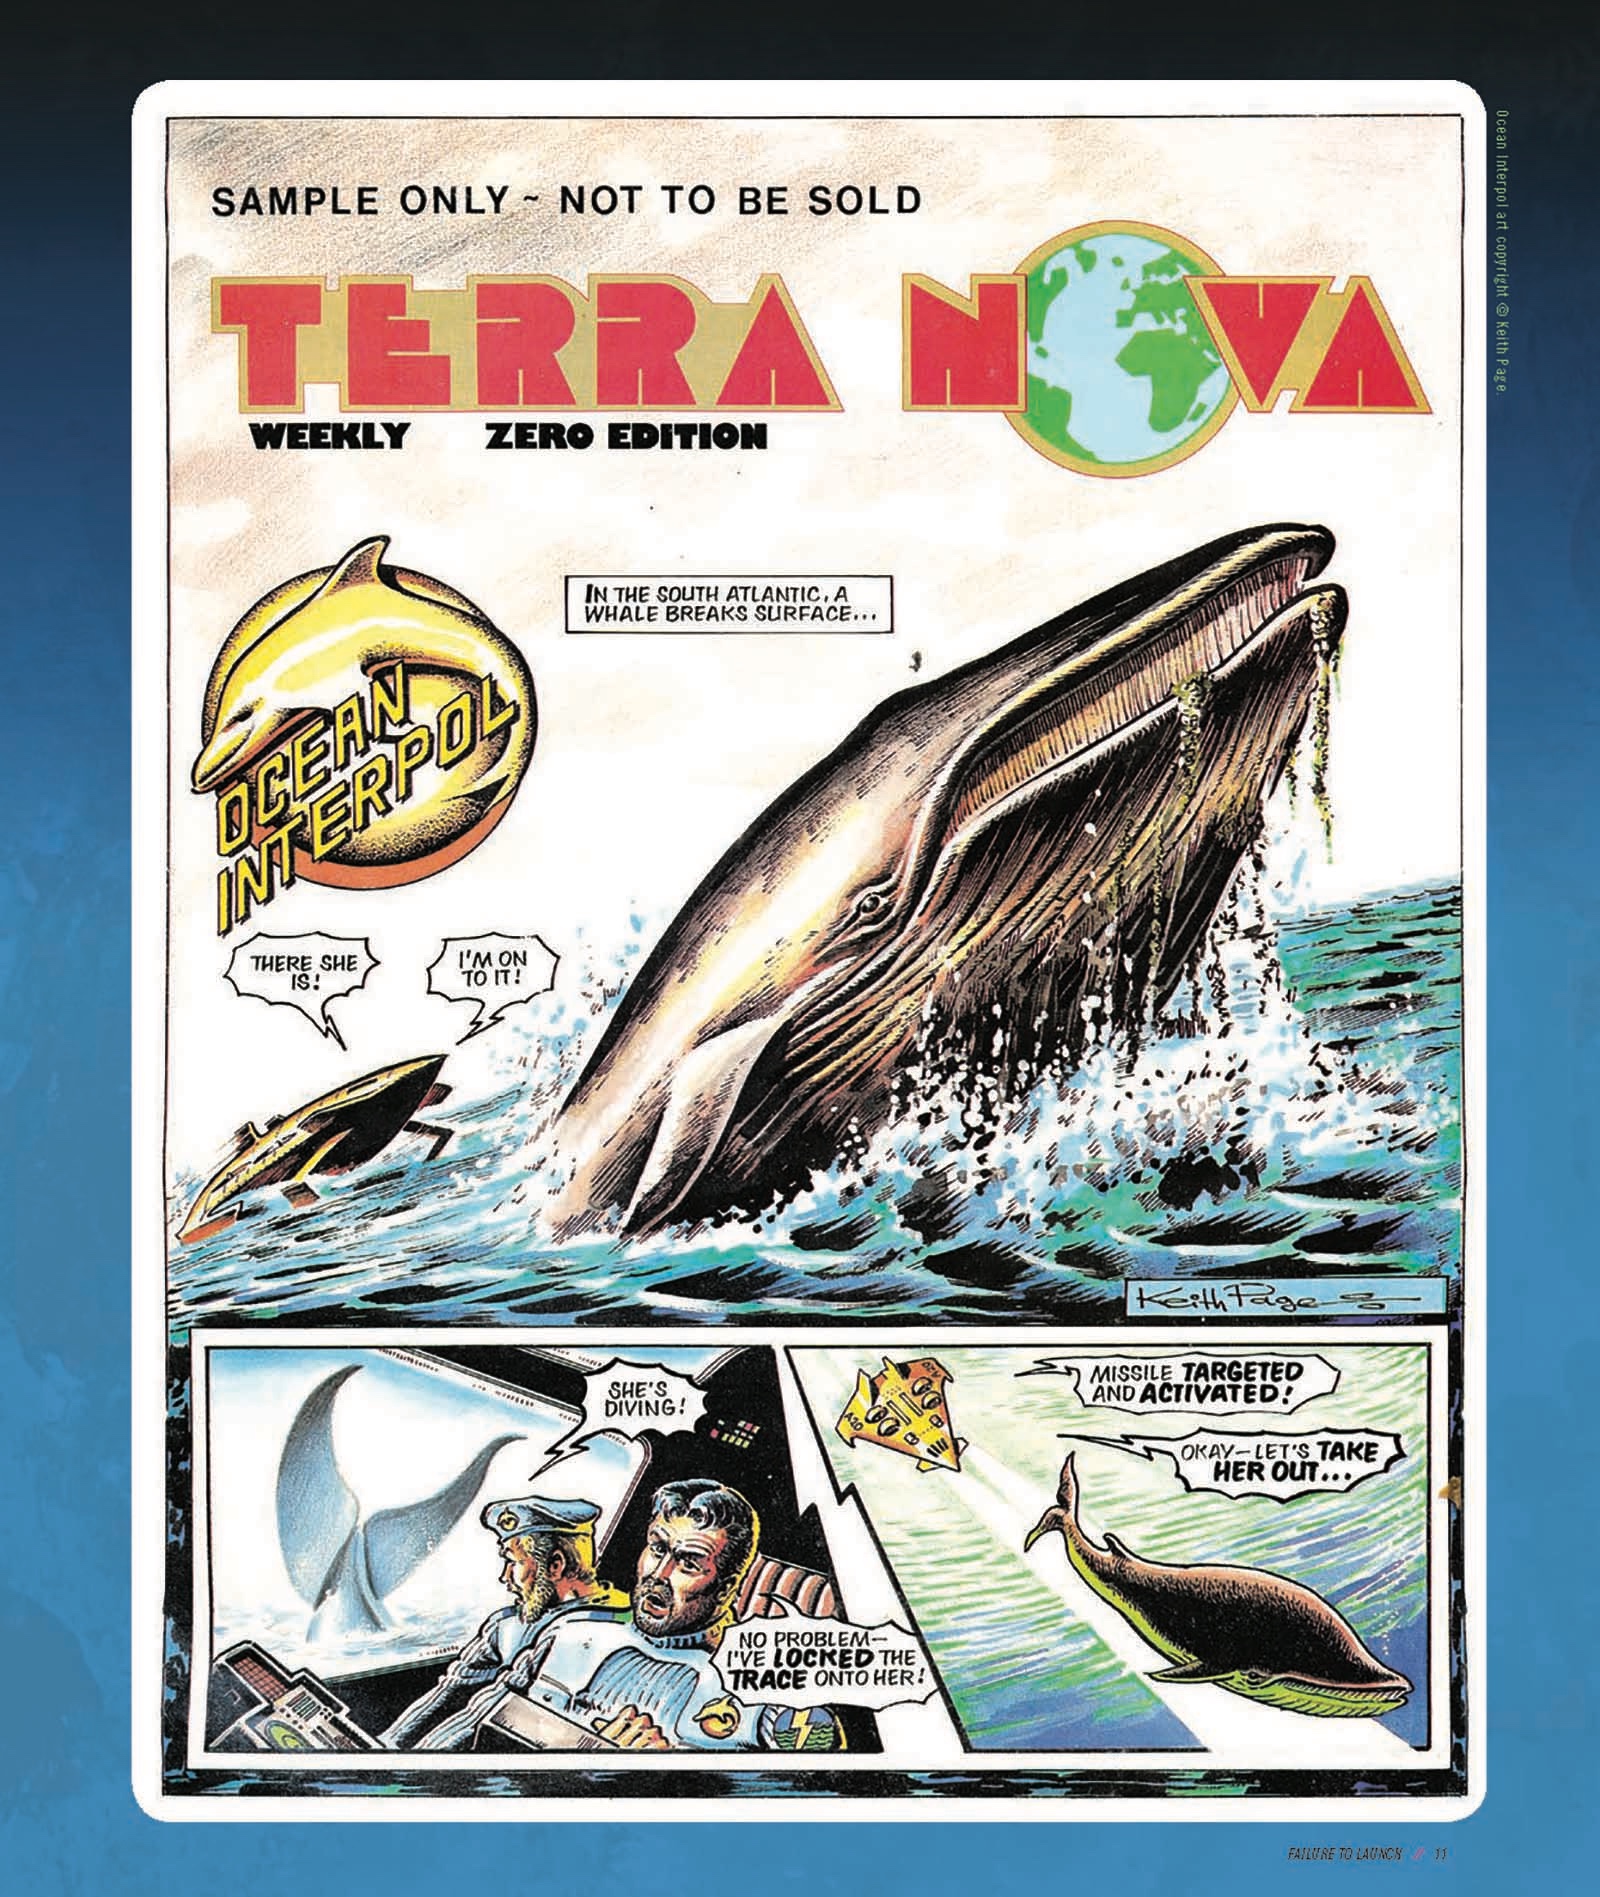 A dummy cover for Derek Lord’s unpublished Terra Nova comic